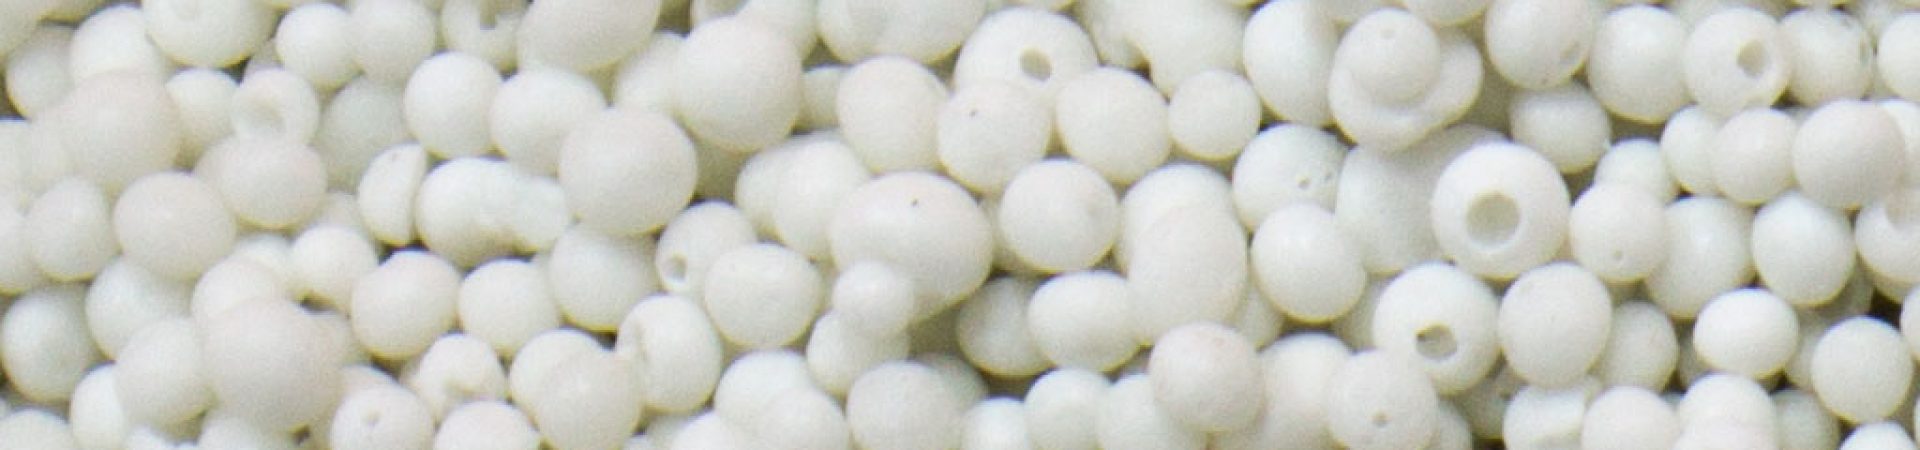 Fertilizantes agrocolmex fosfonitrato